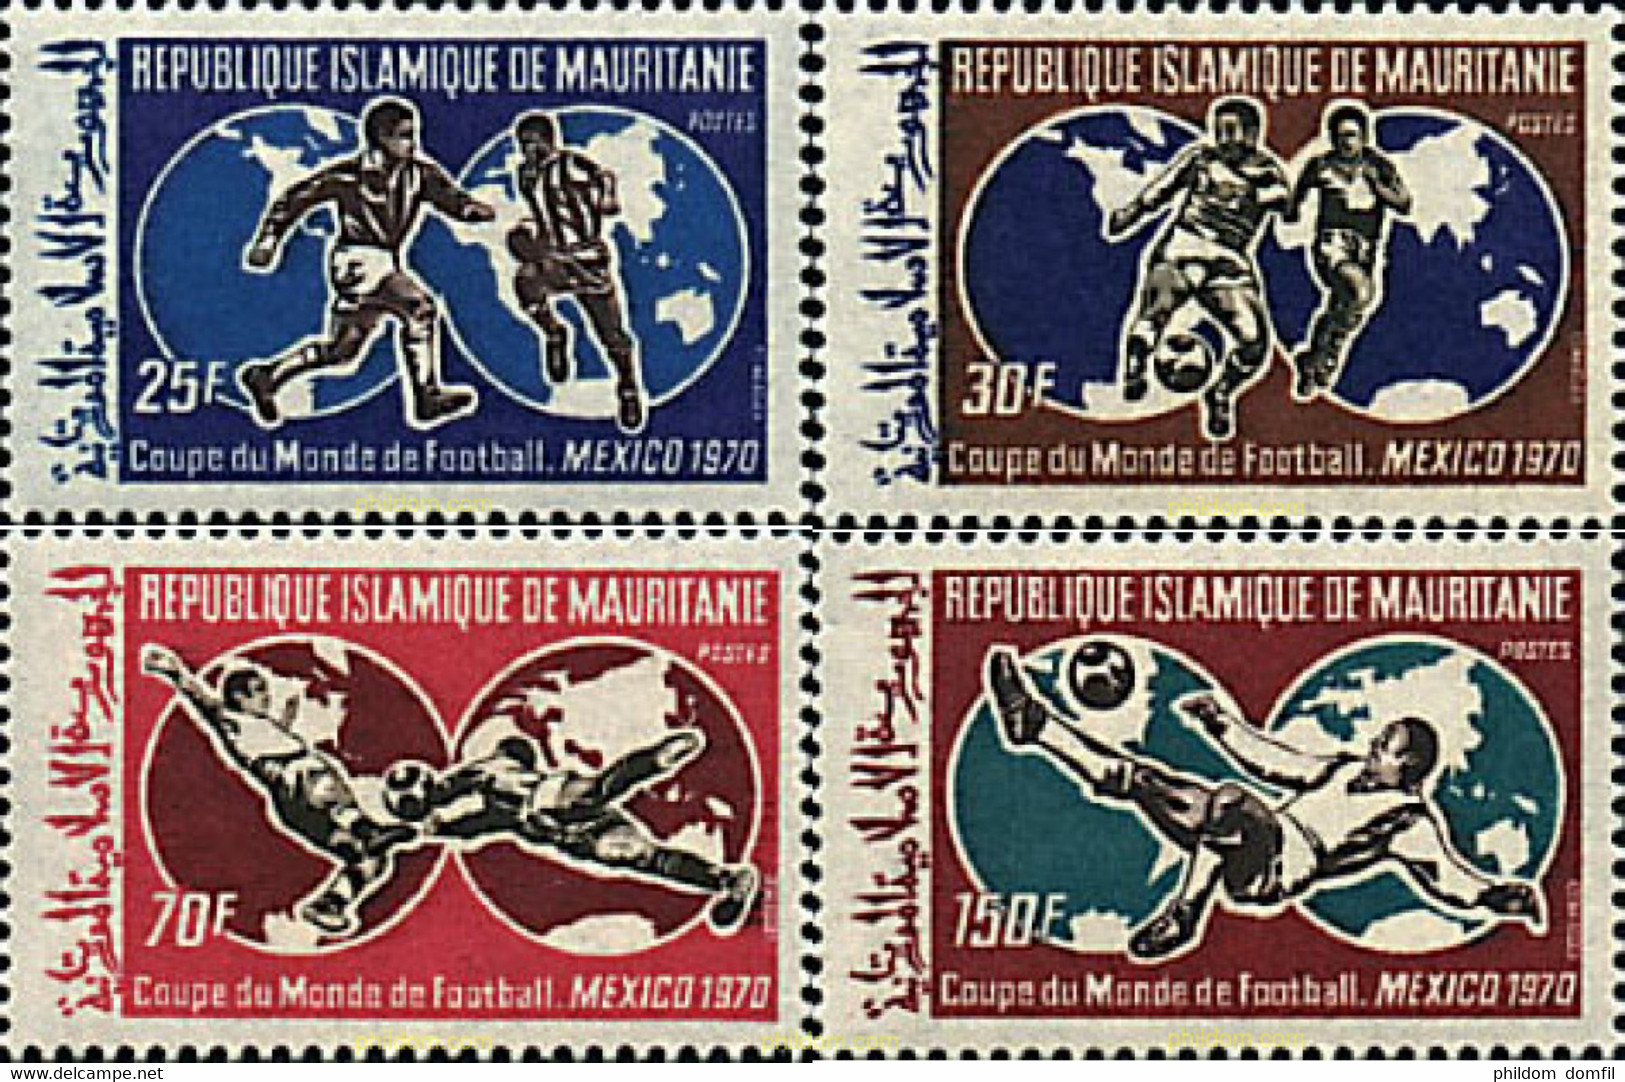 71328 MNH MAURITANIA 1970 COPA DEL MUNDO DE FUTBOL - MEXICO-70 - Mauritanie (1960-...)